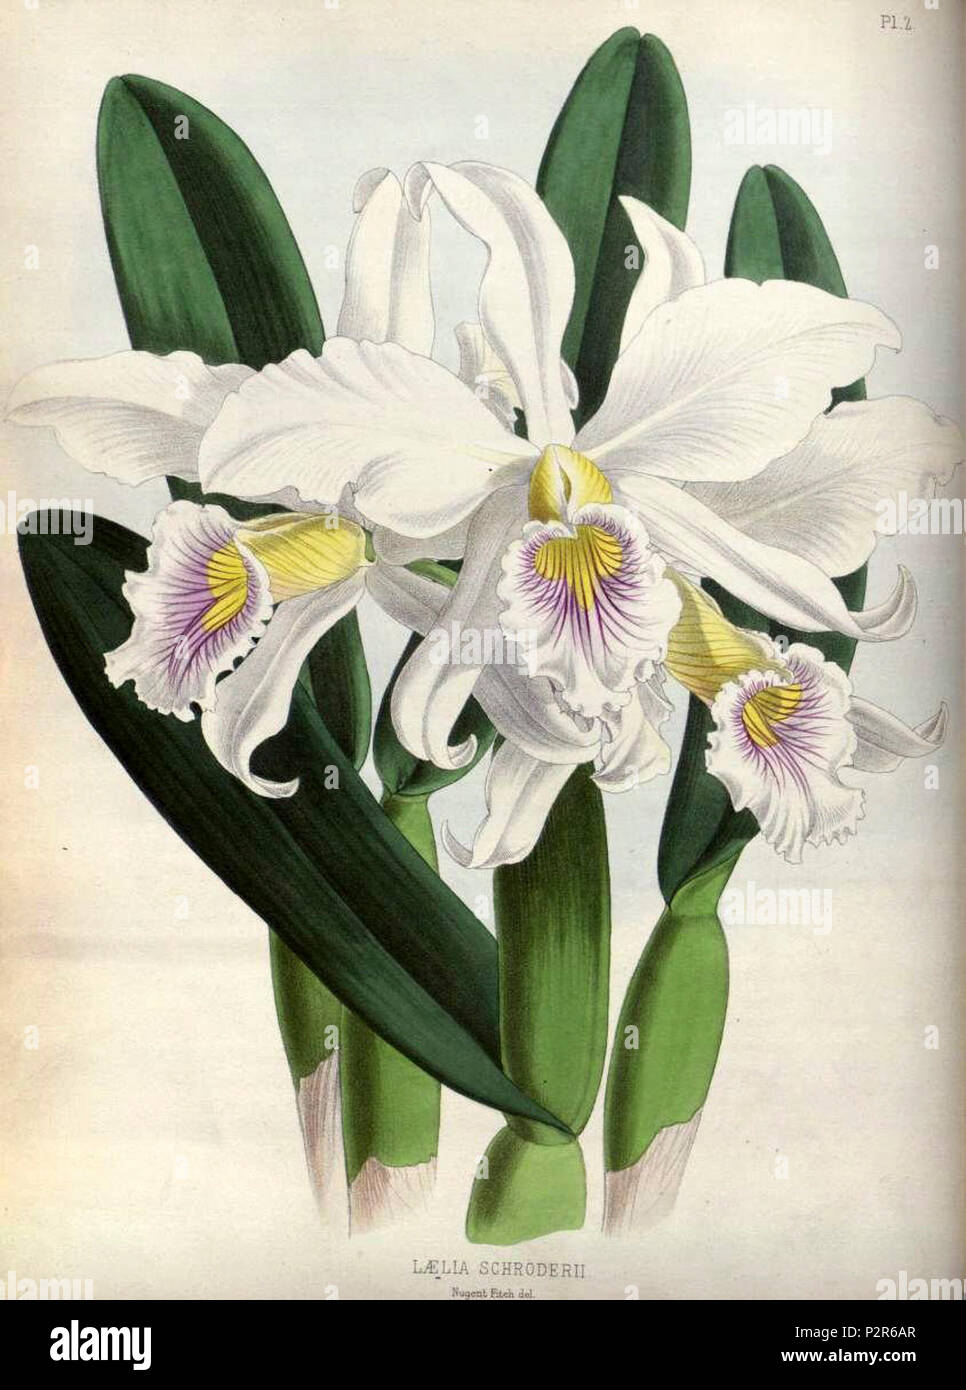 (The Orchid Album Plate 002) Laelia schroderii. Stock Photo